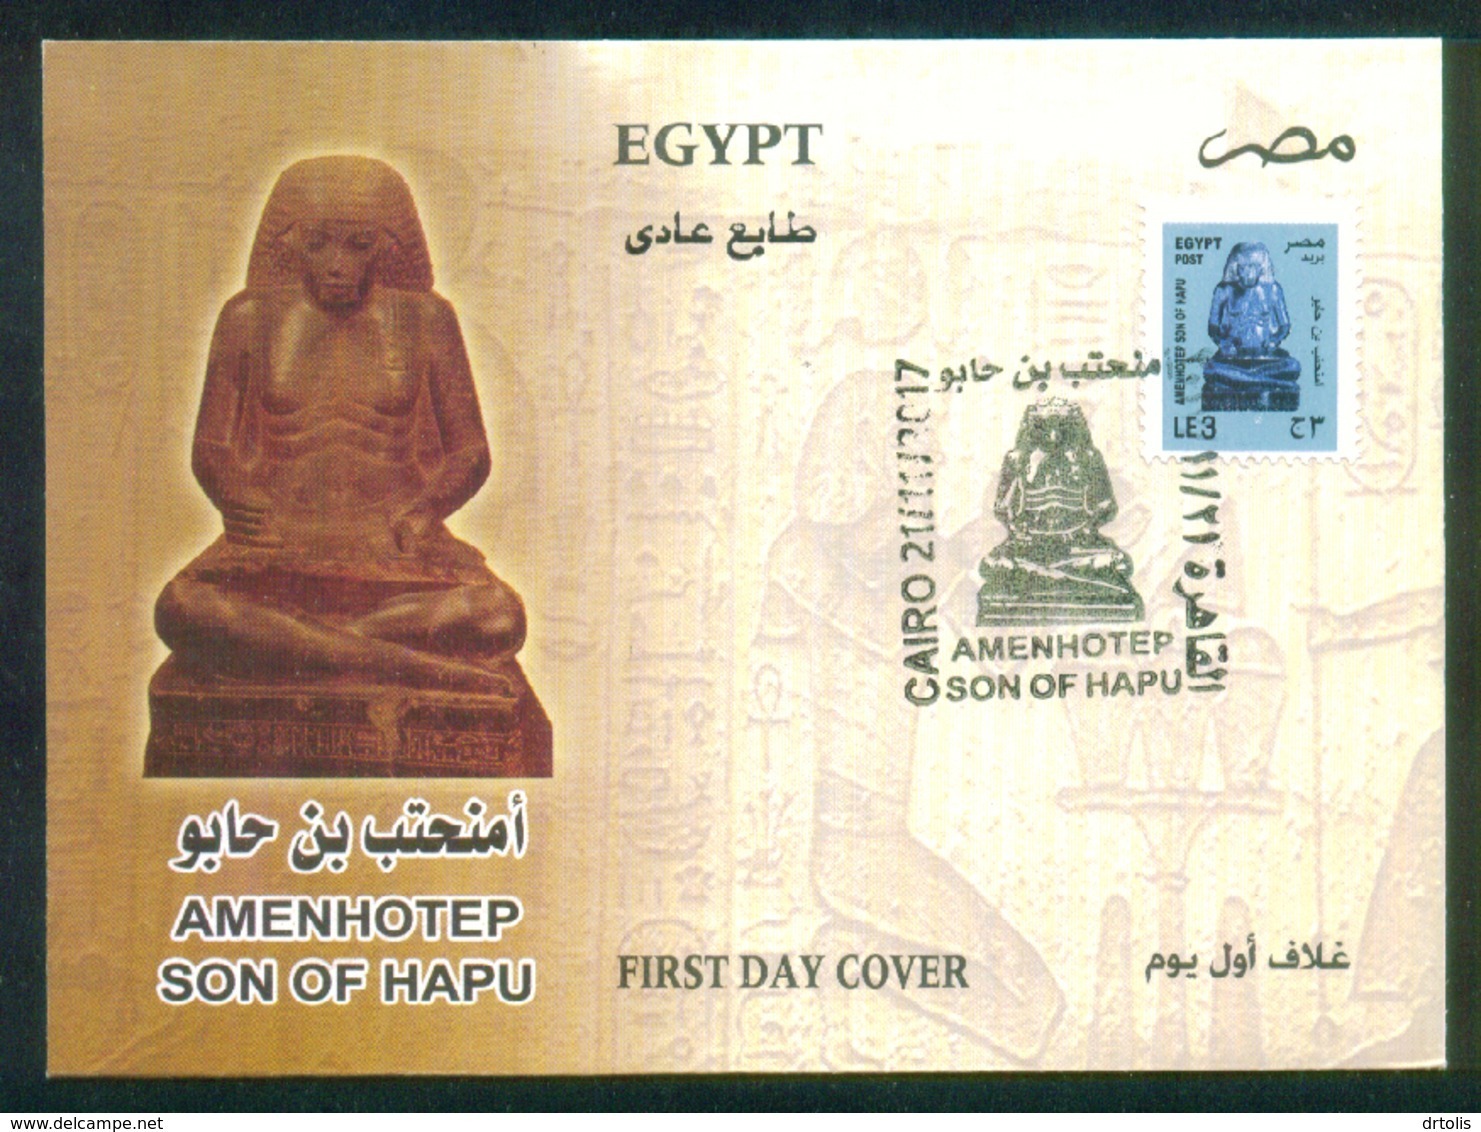 EGYPT / 2017 / AMENHOTEP ; SON OF HAPU /  EGYPTOLOGY / ARCHEOLOGY / FDC - Briefe U. Dokumente